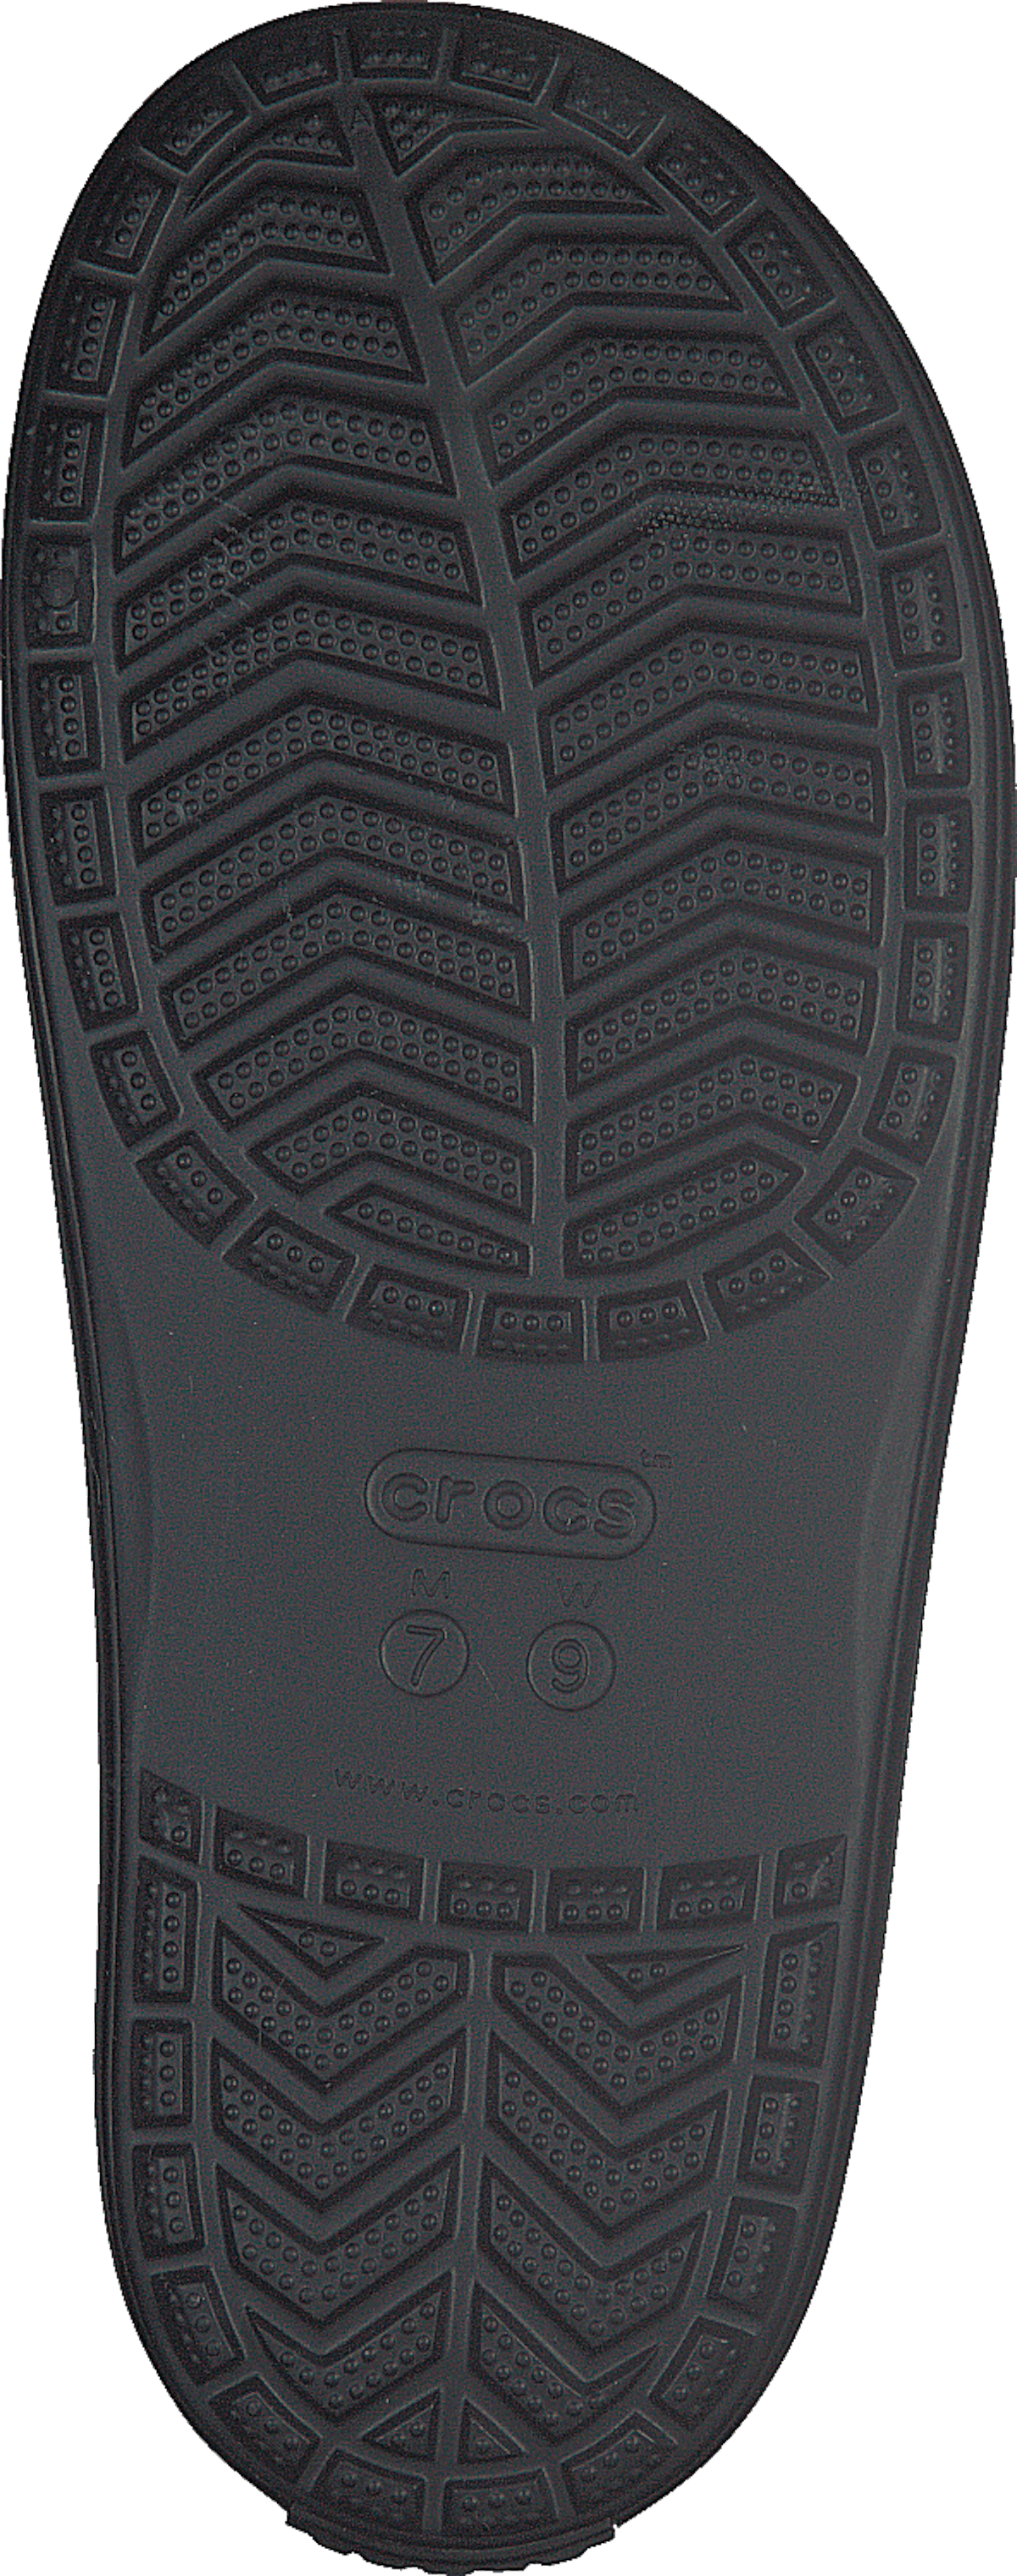 Crocband III Slide Black / Graphite